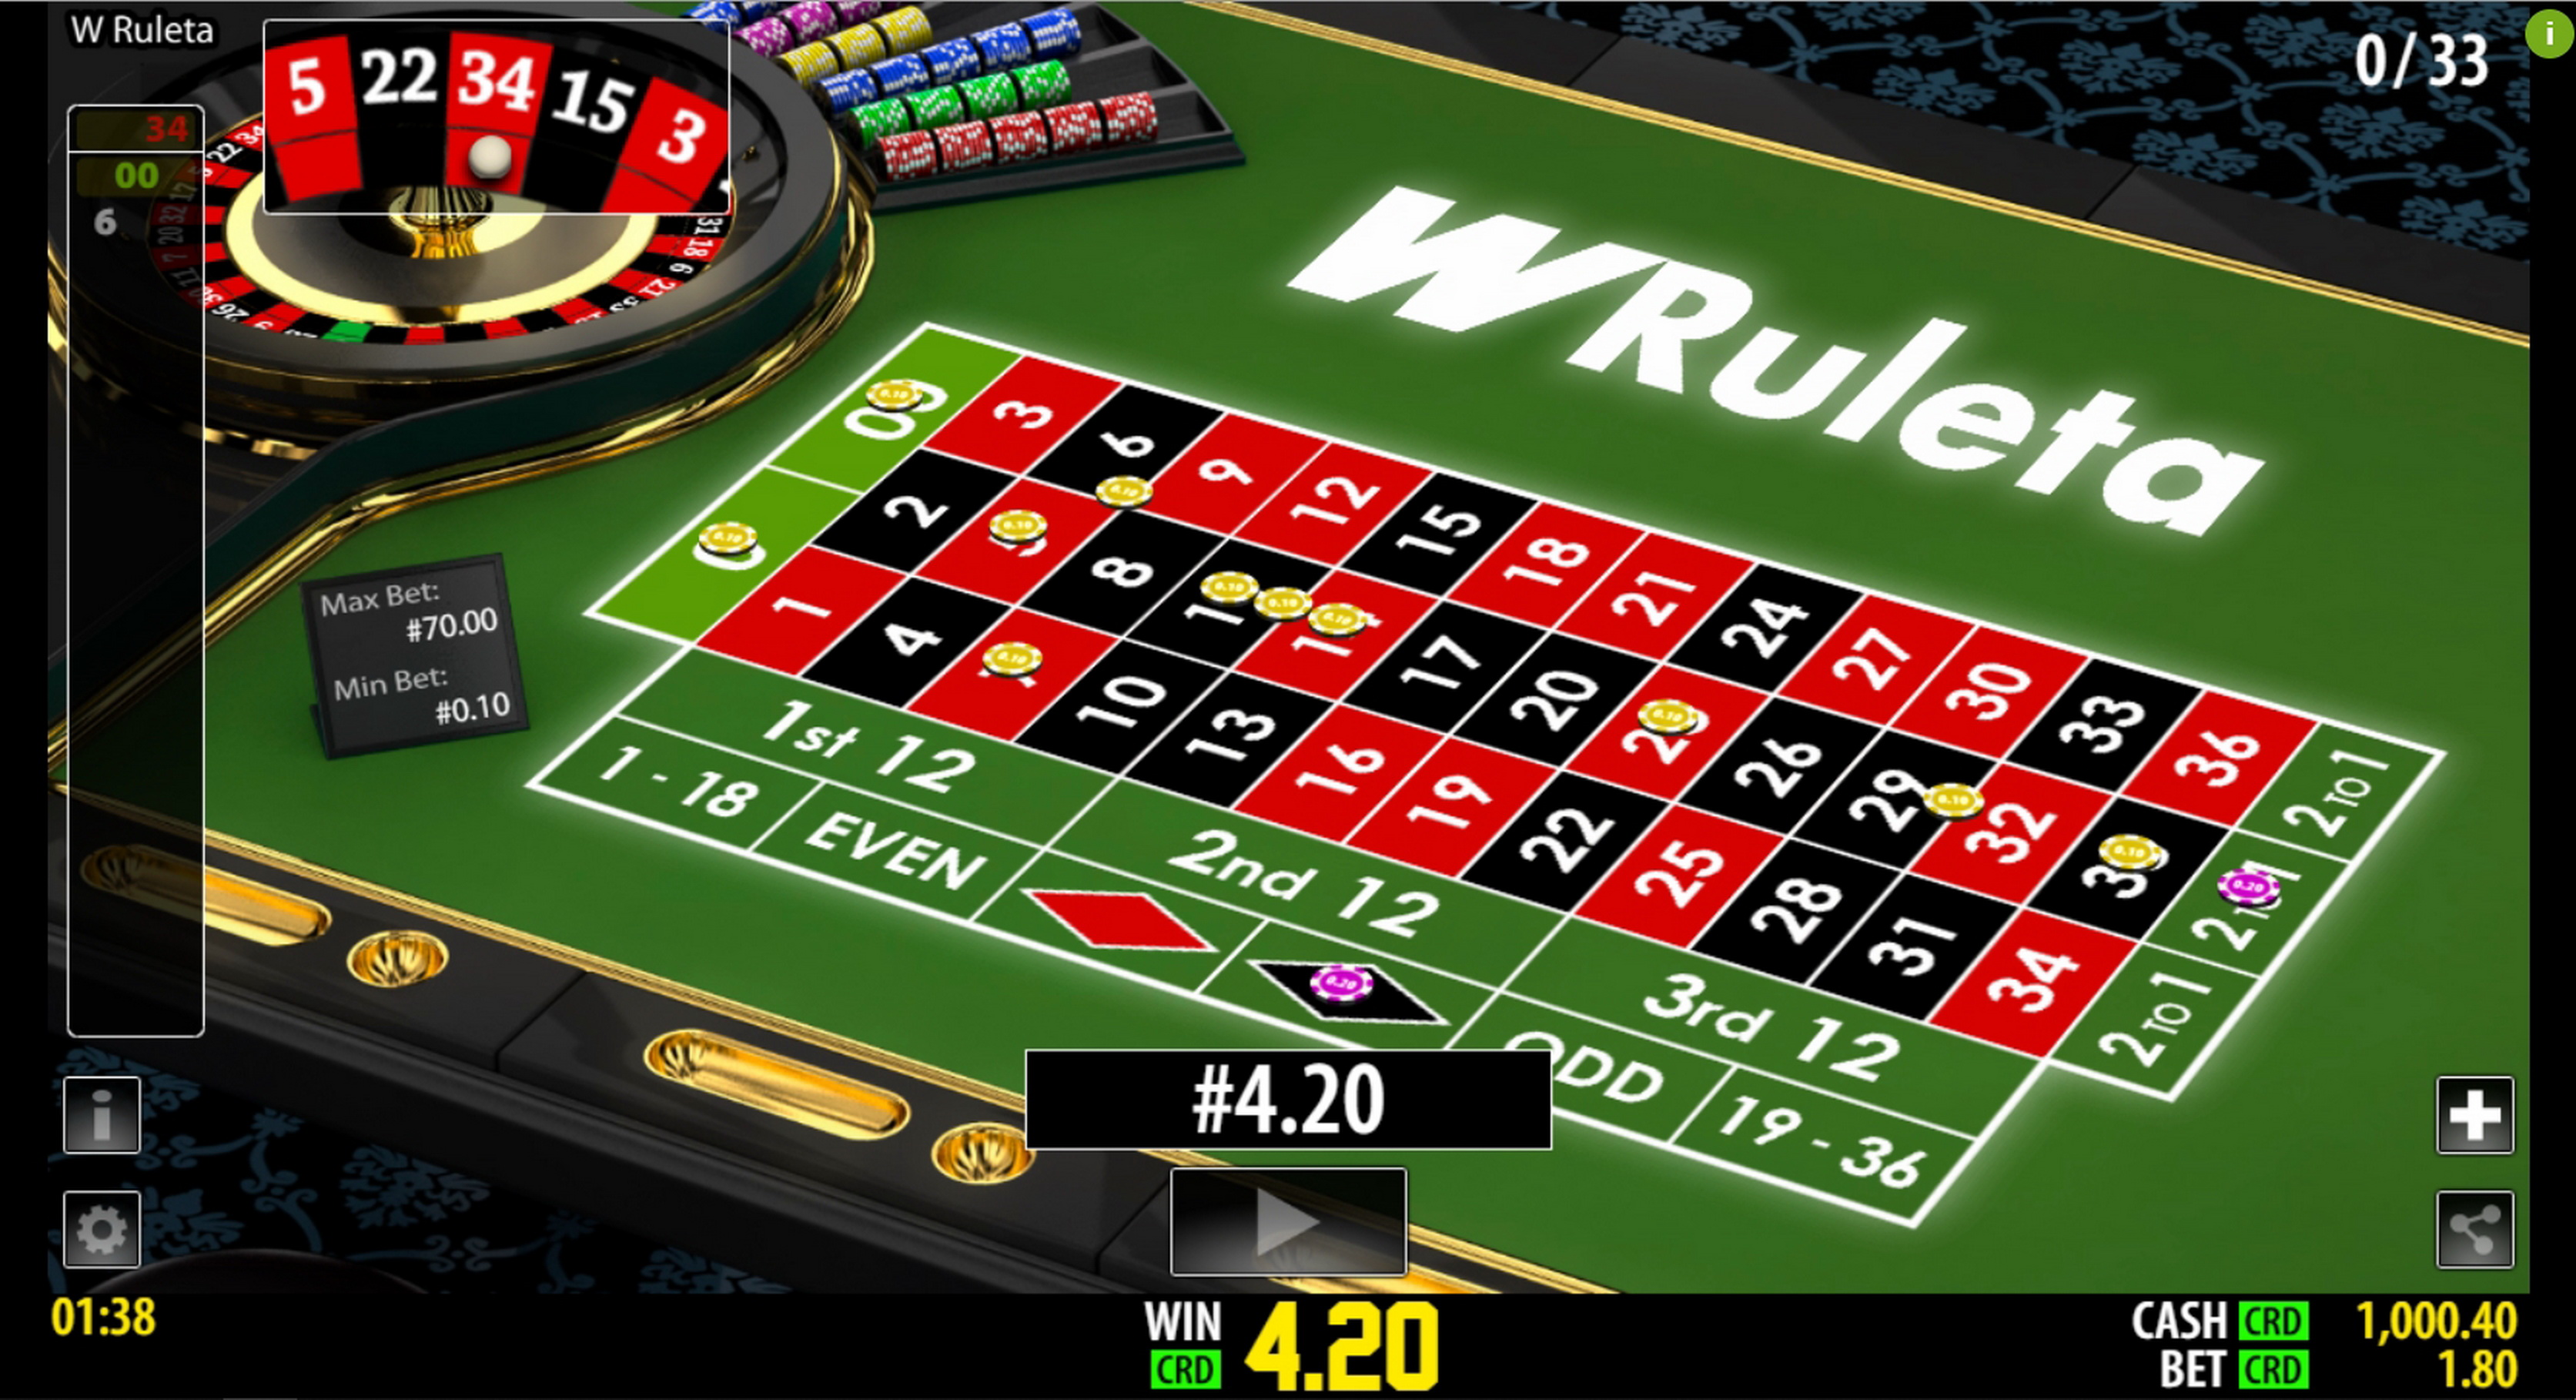 Win Money in W Ruleta Free Slot Game by World Match